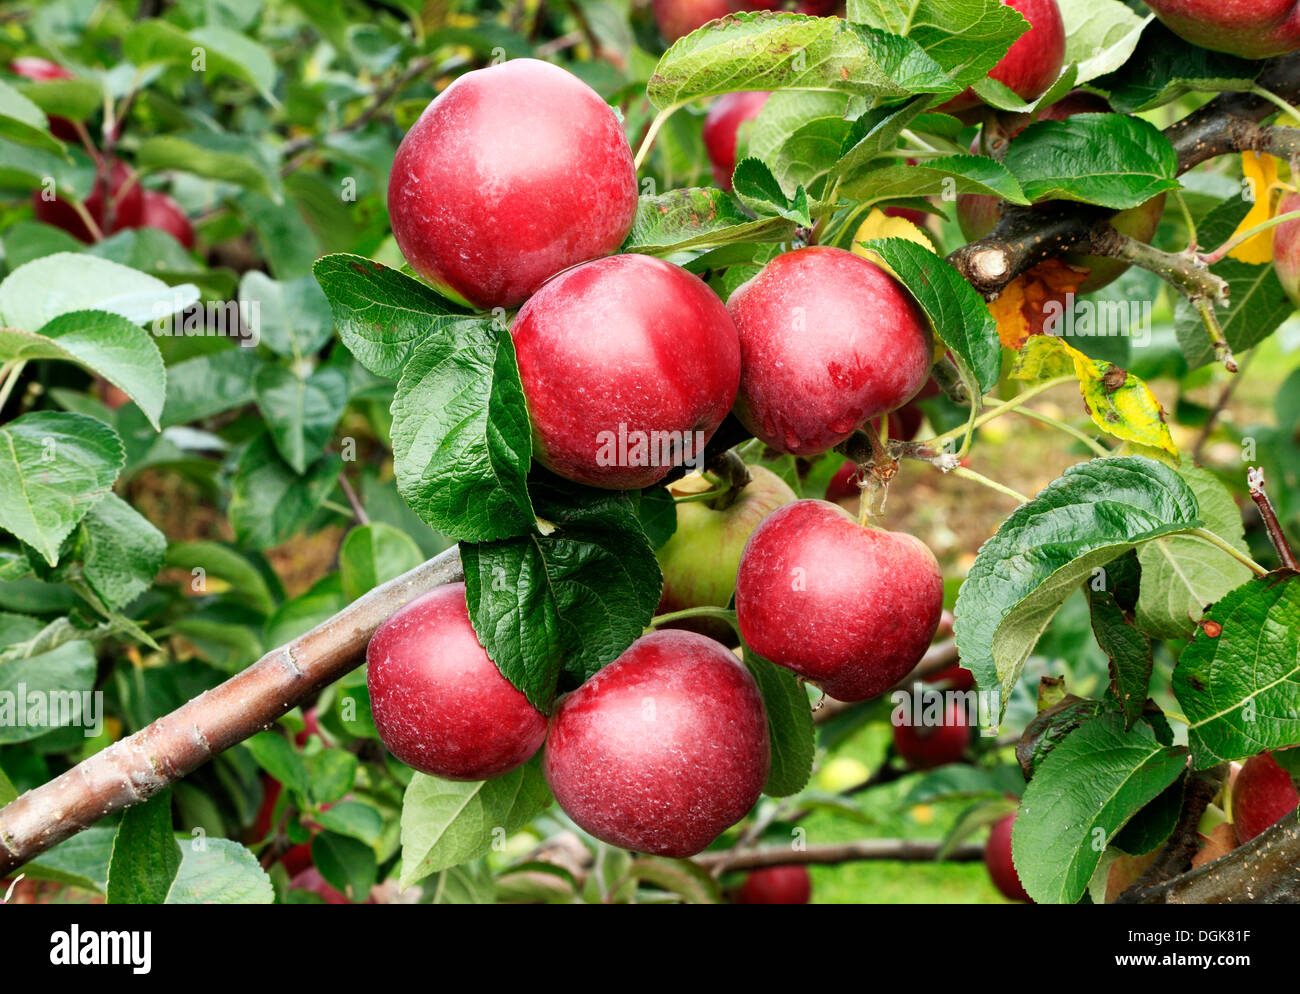 Apple 'Spartan', malus domestica apples variety varieties growing on tree Stock Photo